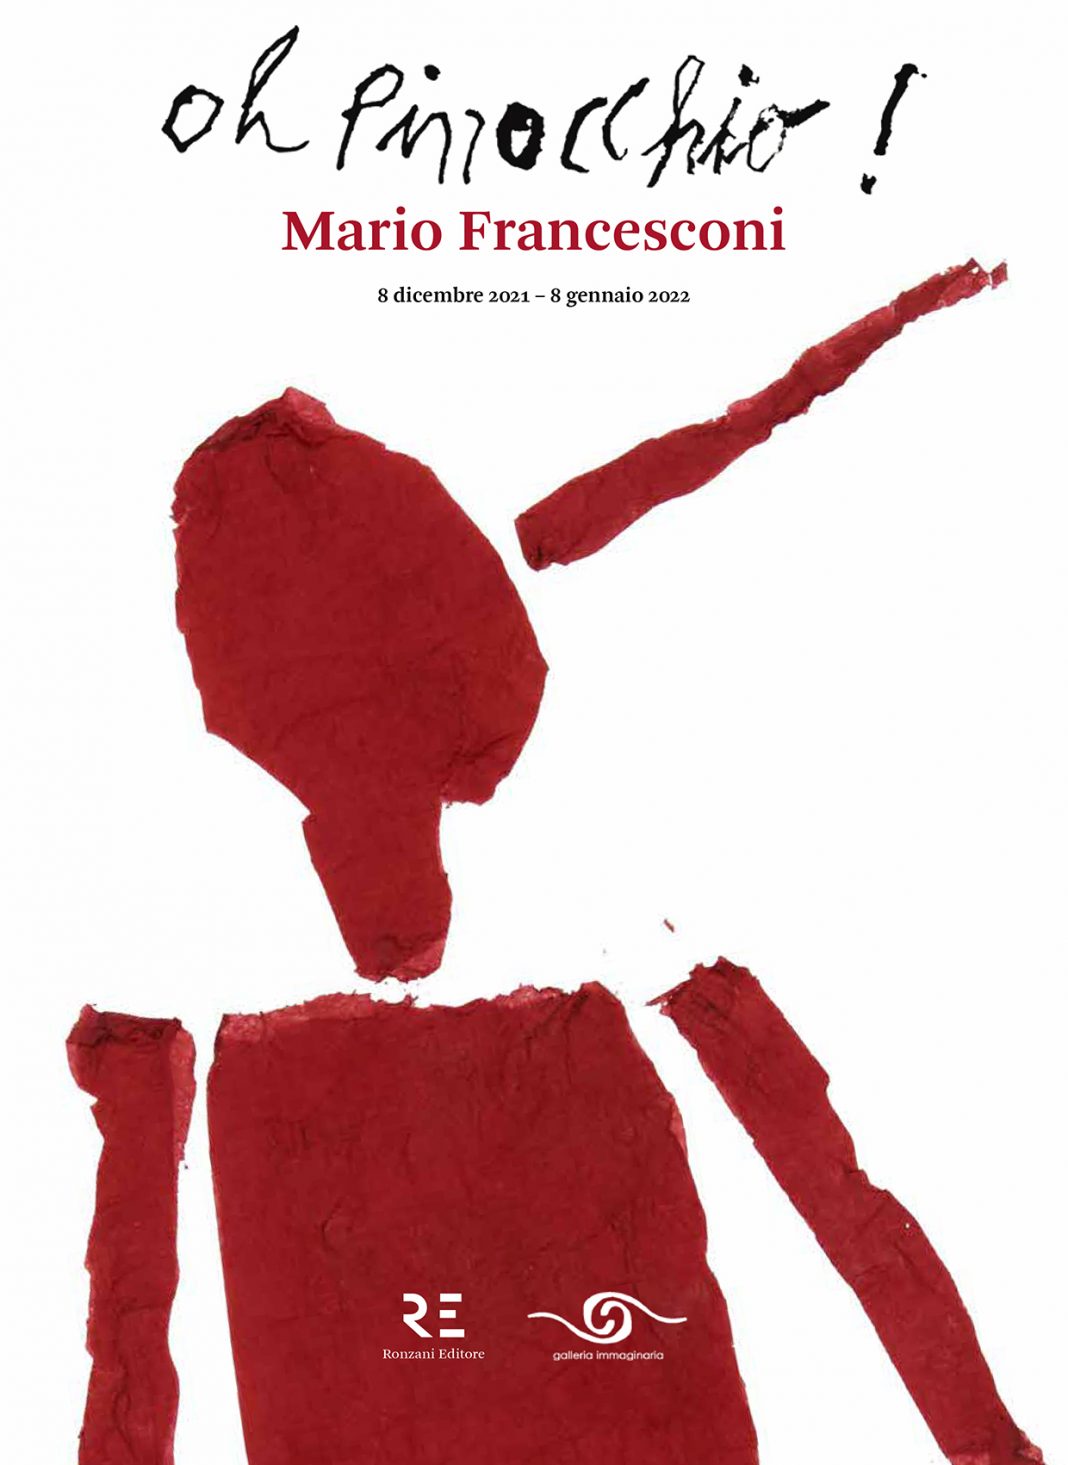 Mario Francesconi – Oh Pinocchio!https://www.exibart.com/repository/media/formidable/11/img/6a5/Invito-Oh-Pinocchio-1068x1465.jpg